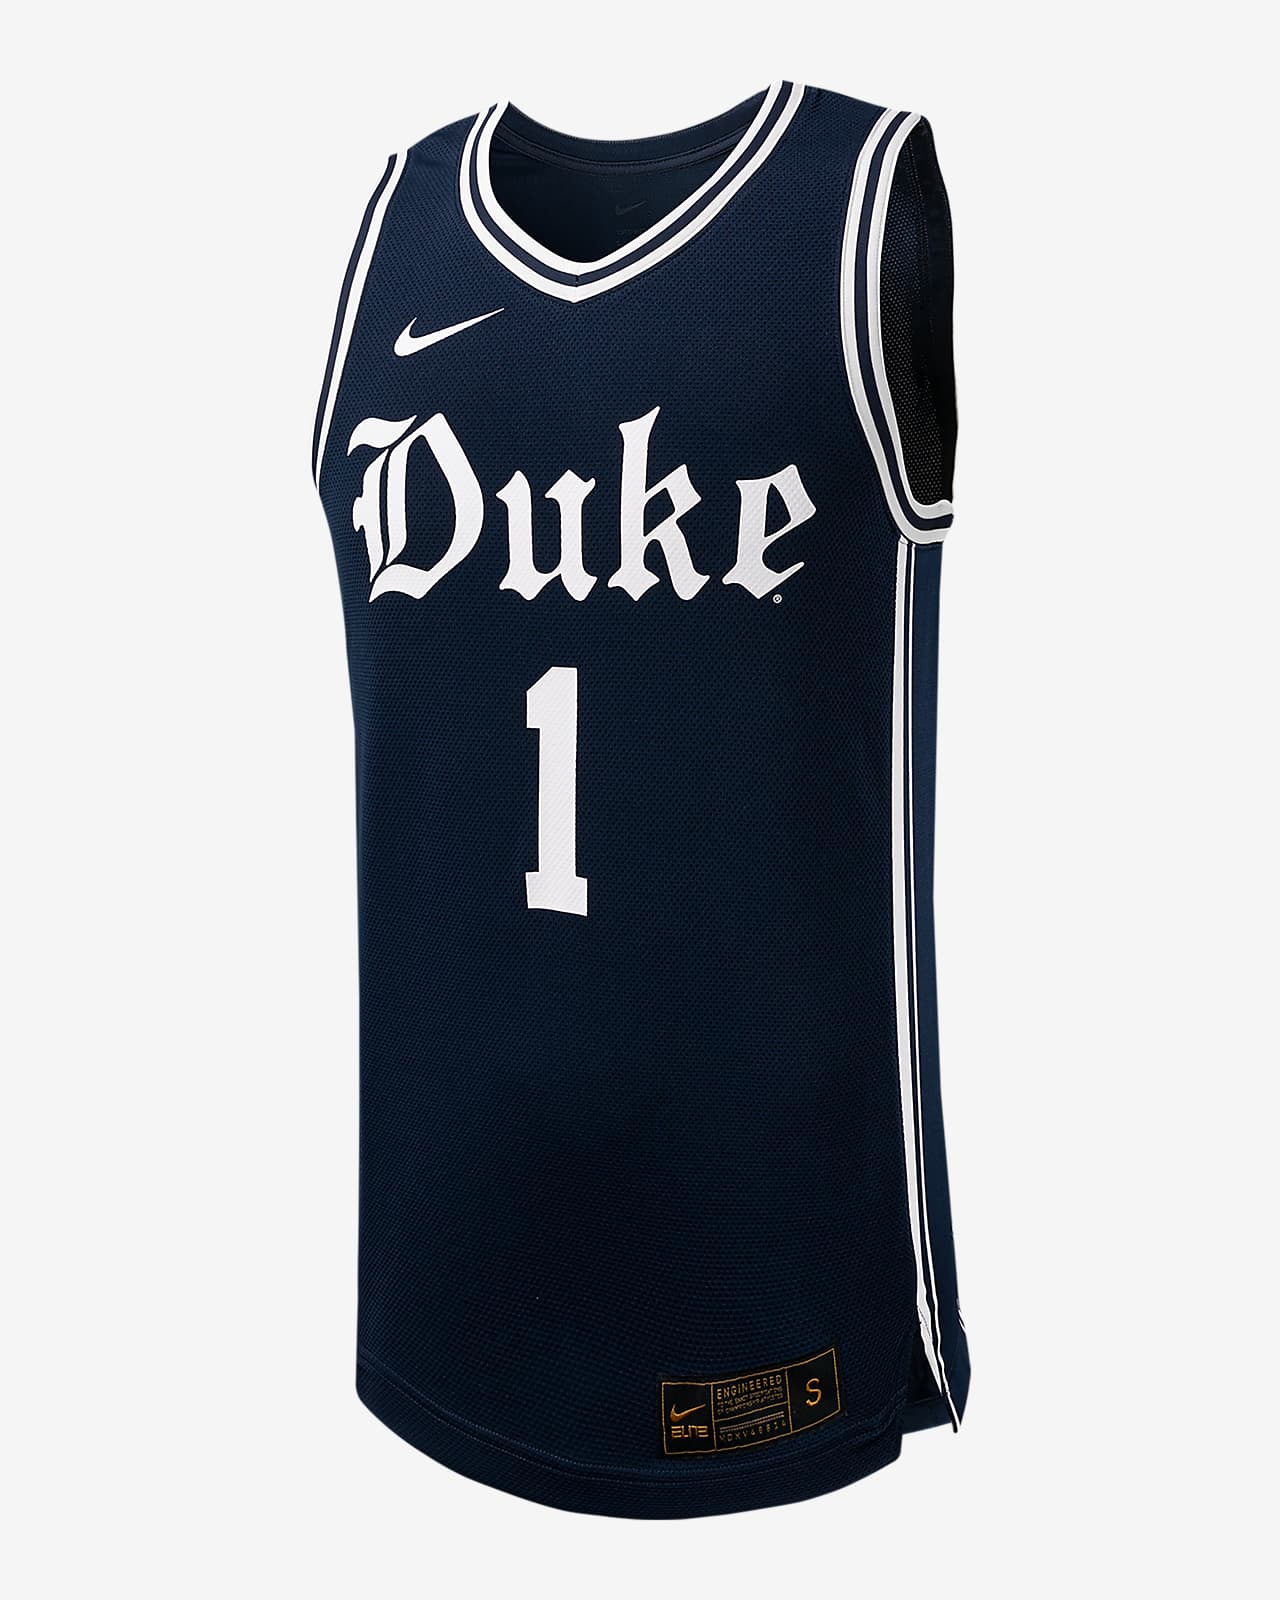 Duke Men's Nike College Basketball Replica Jersey